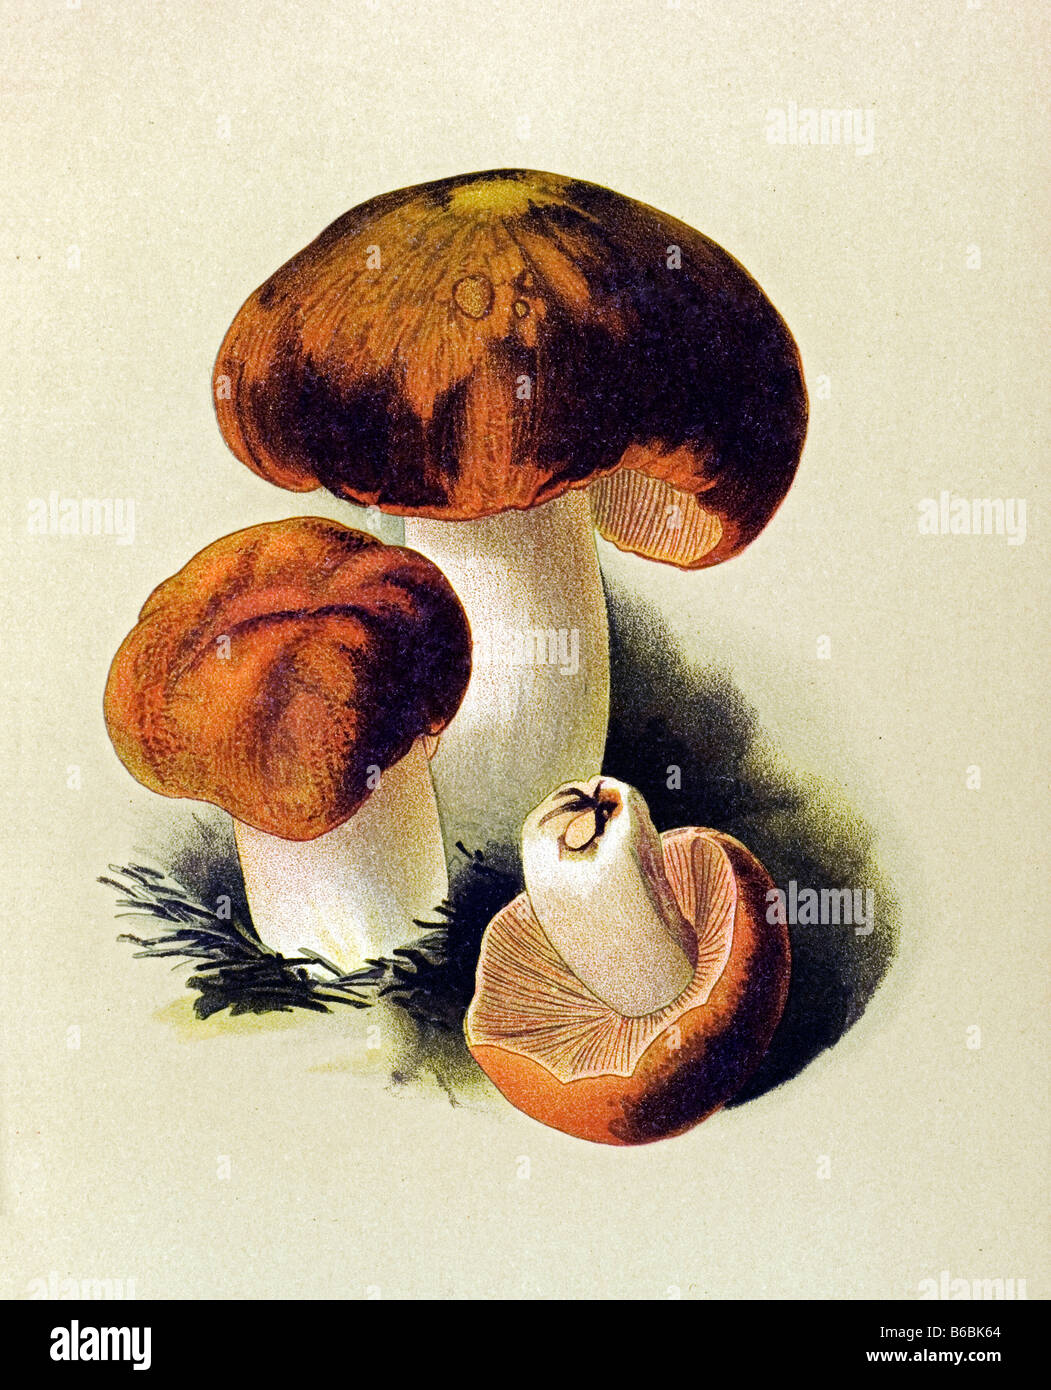 Russula foetens, poisonous parasitic mushrooms fungi illustrations Stock Photo